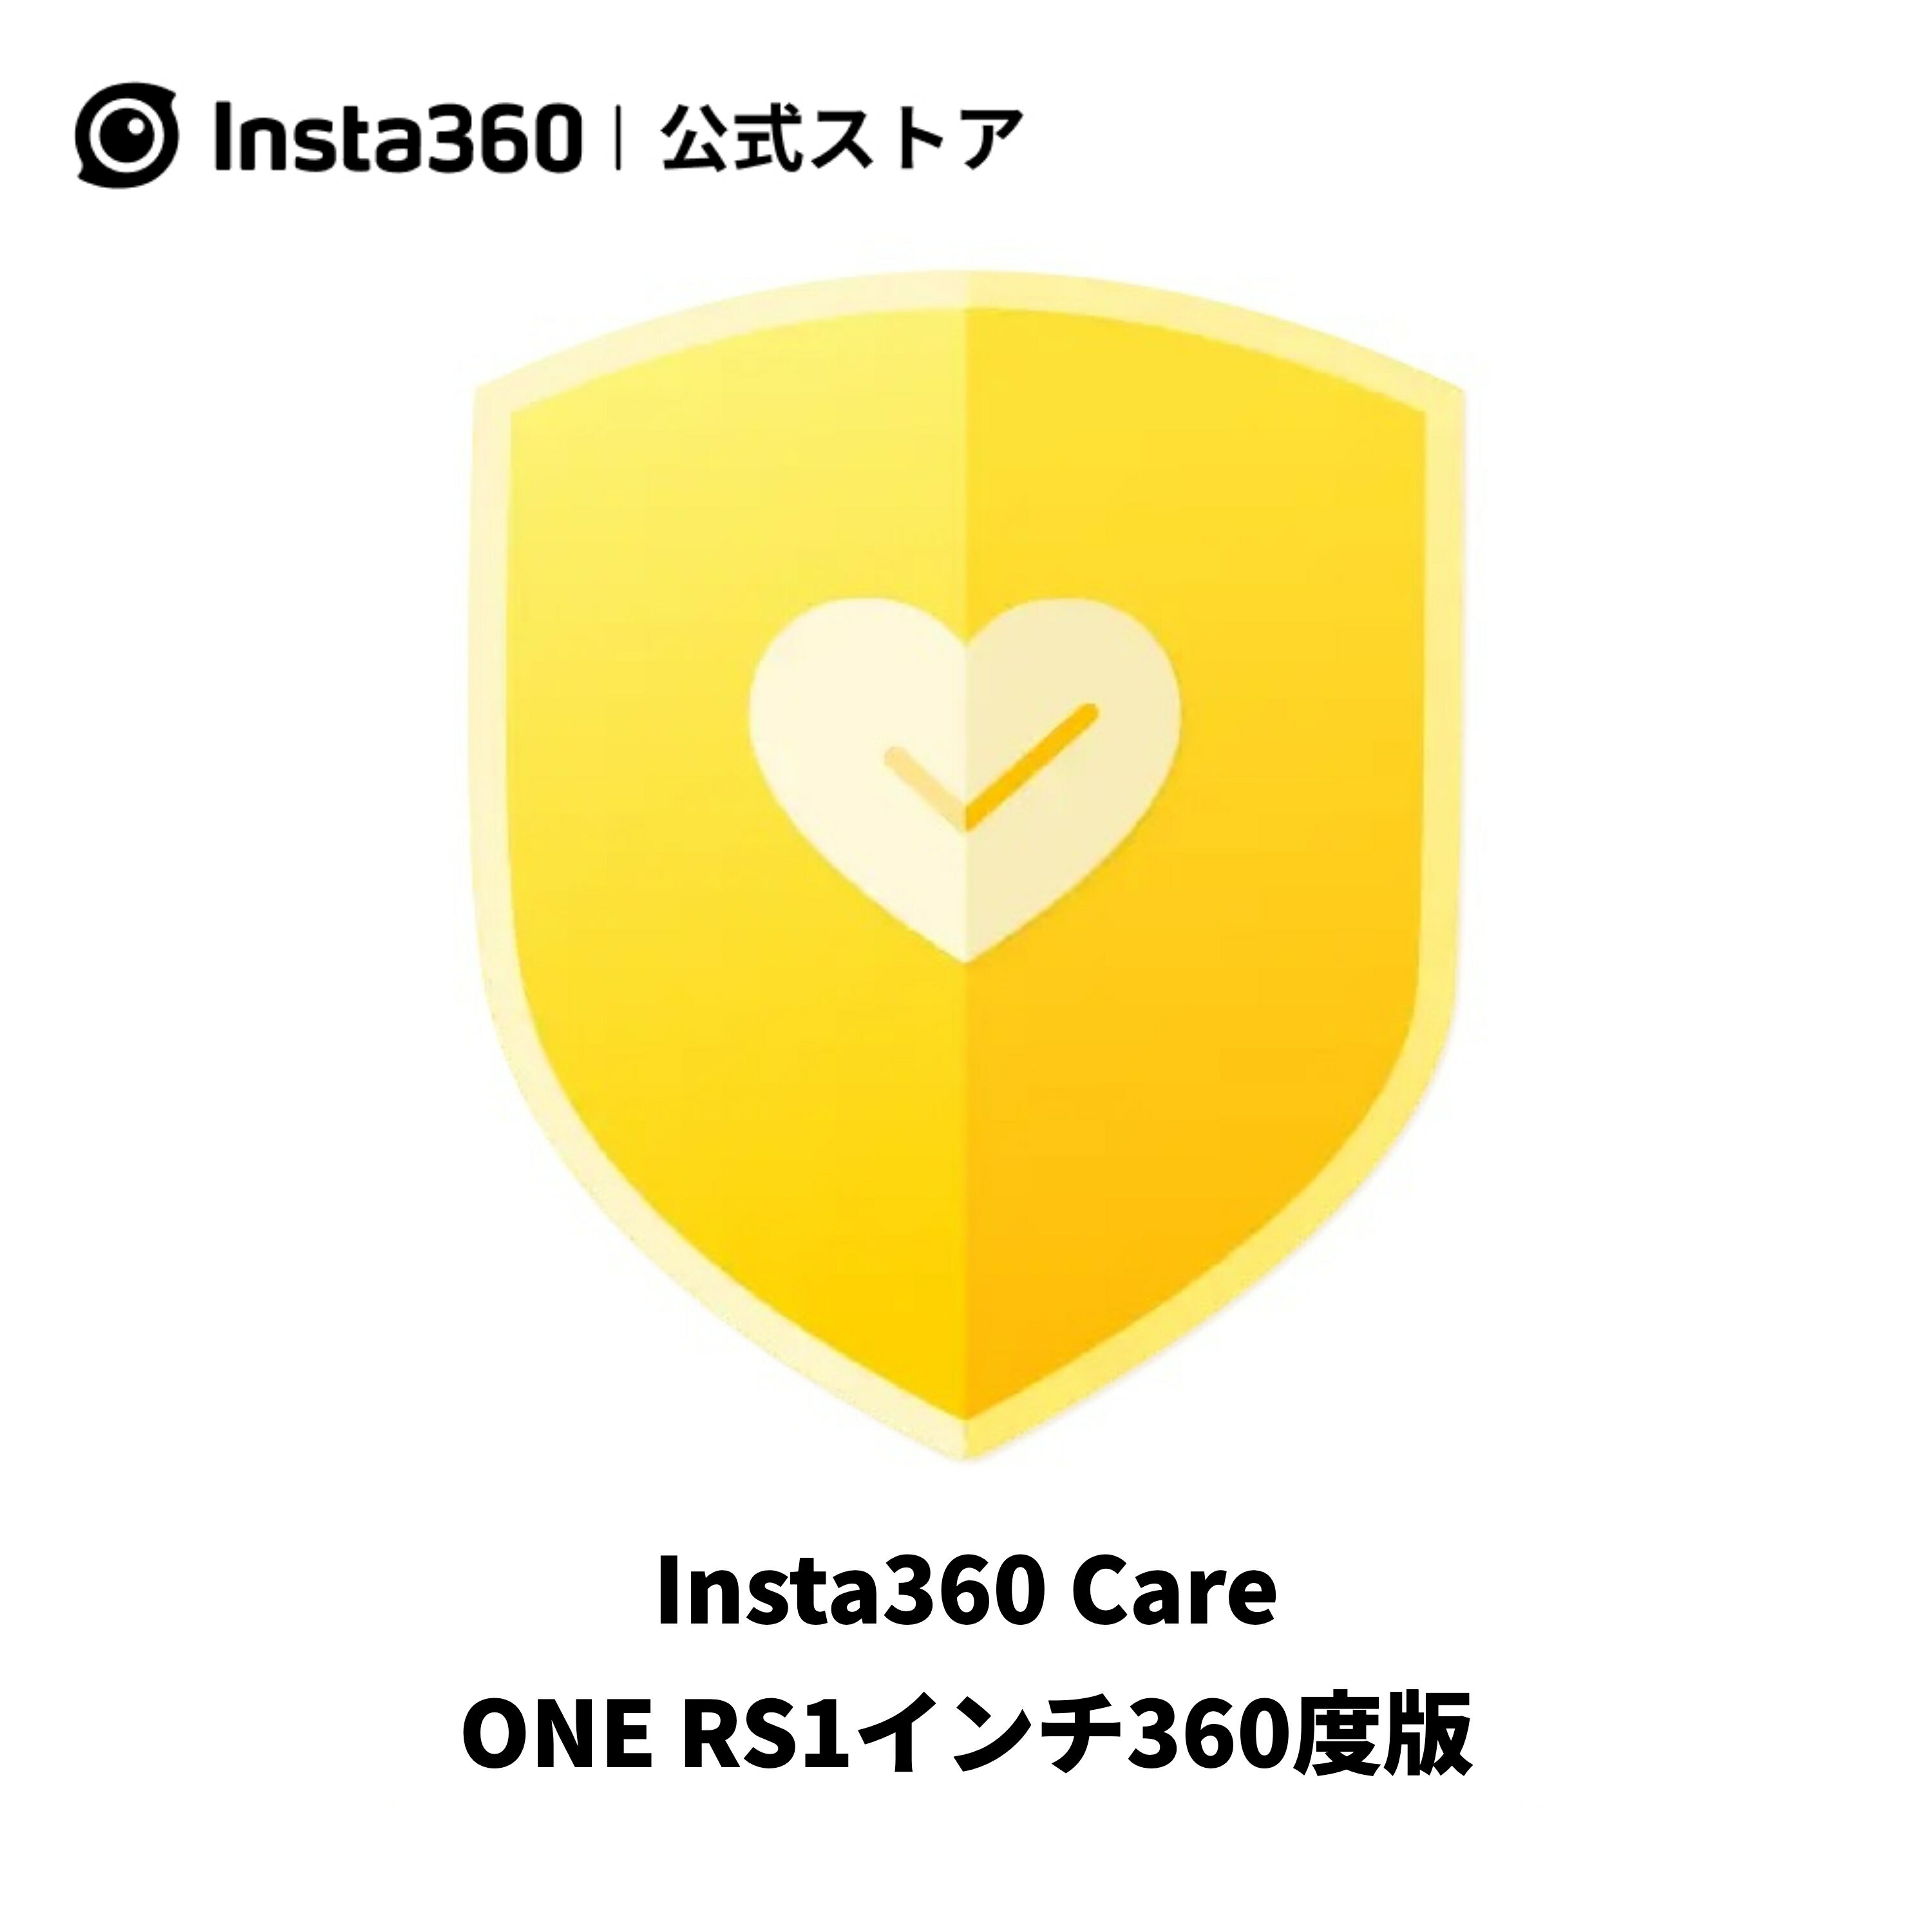 Insta360 Care ONE RS 1インチ 360度版を対象 インスタ360 ケアサービス 実物のない商品【Insta360 公式】